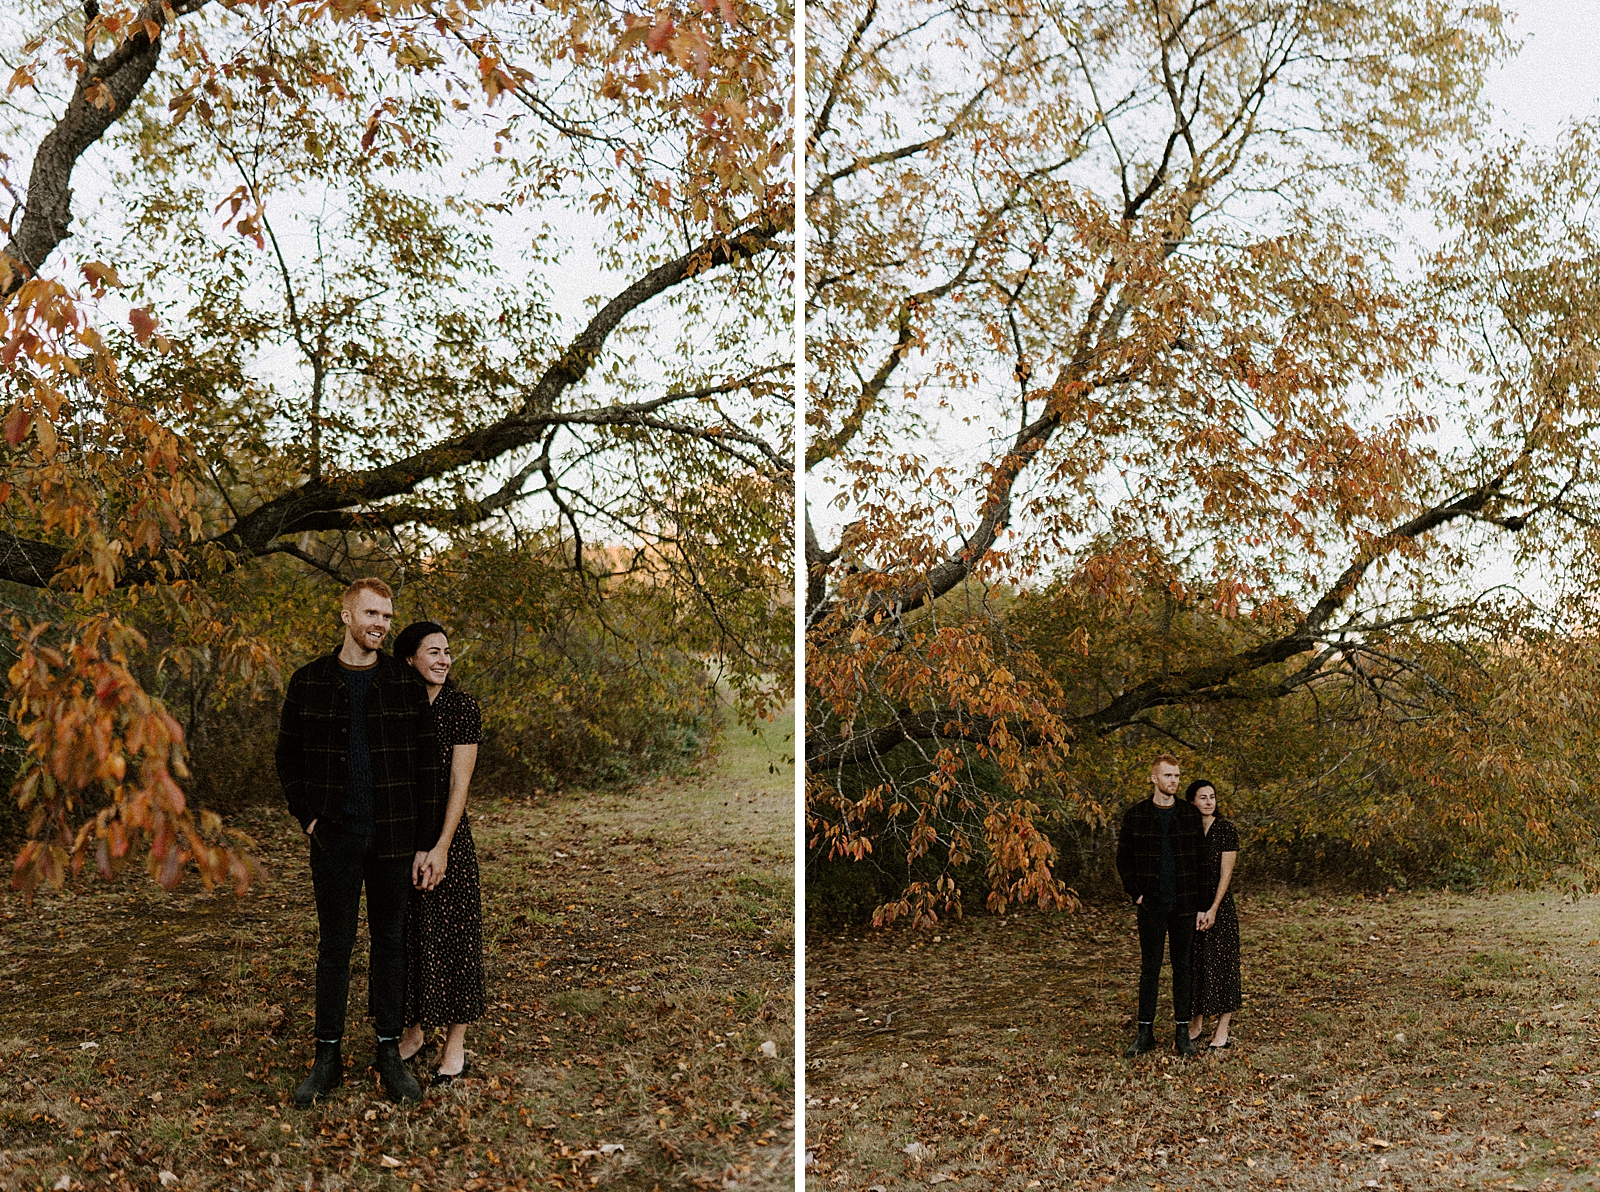 Couple under fall tree on grassy field